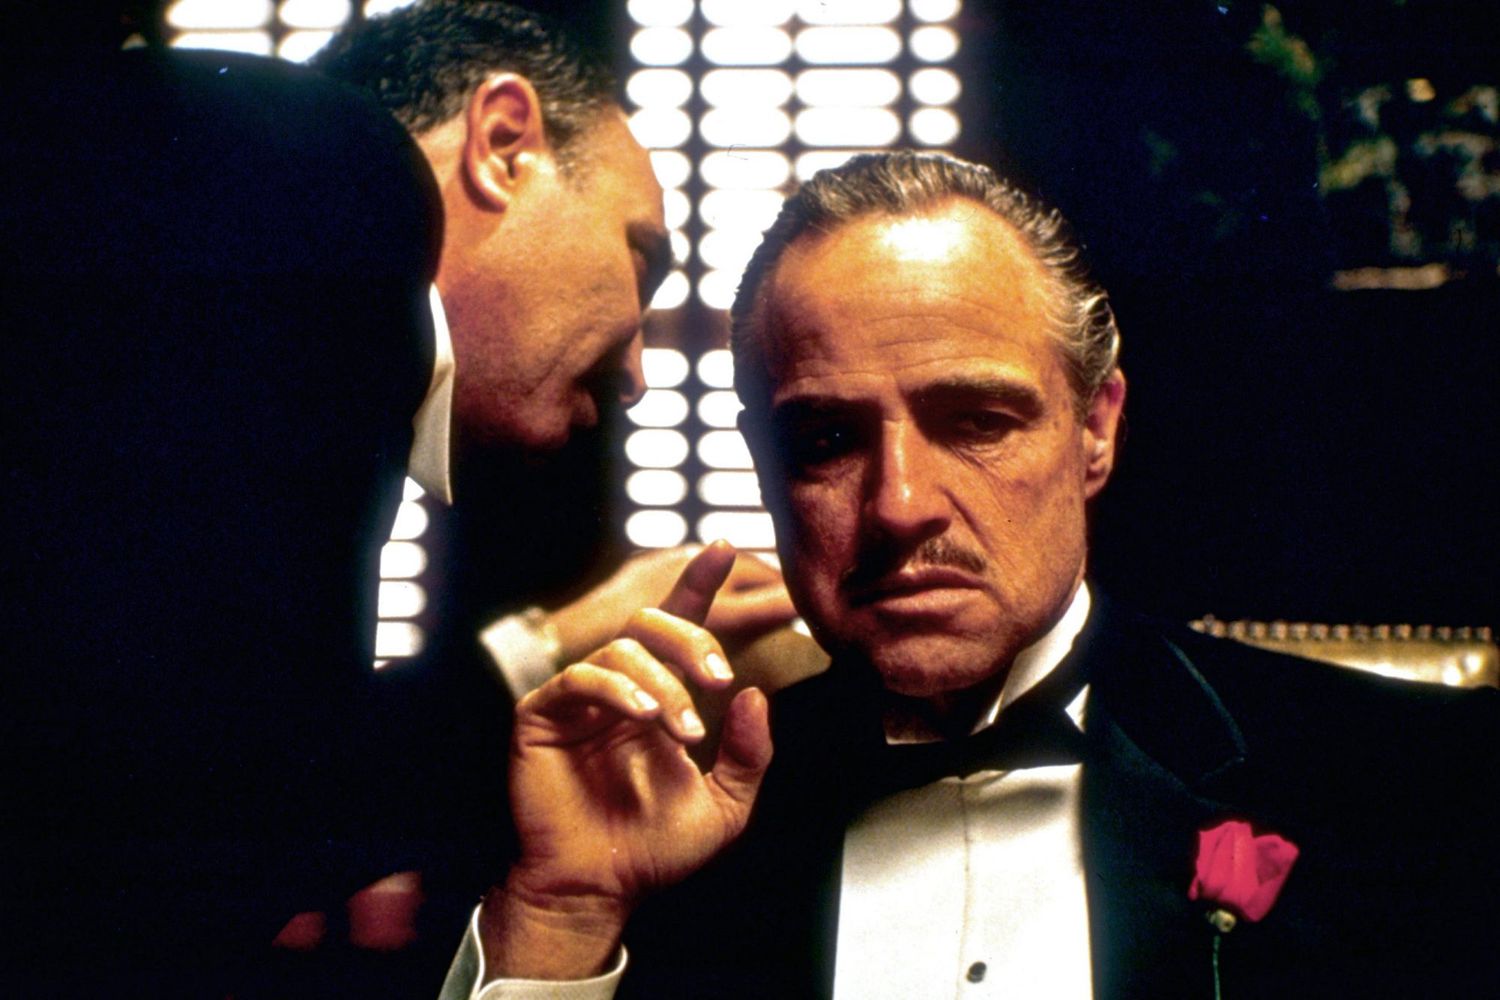 Marlon Brando in The Godfather Part I